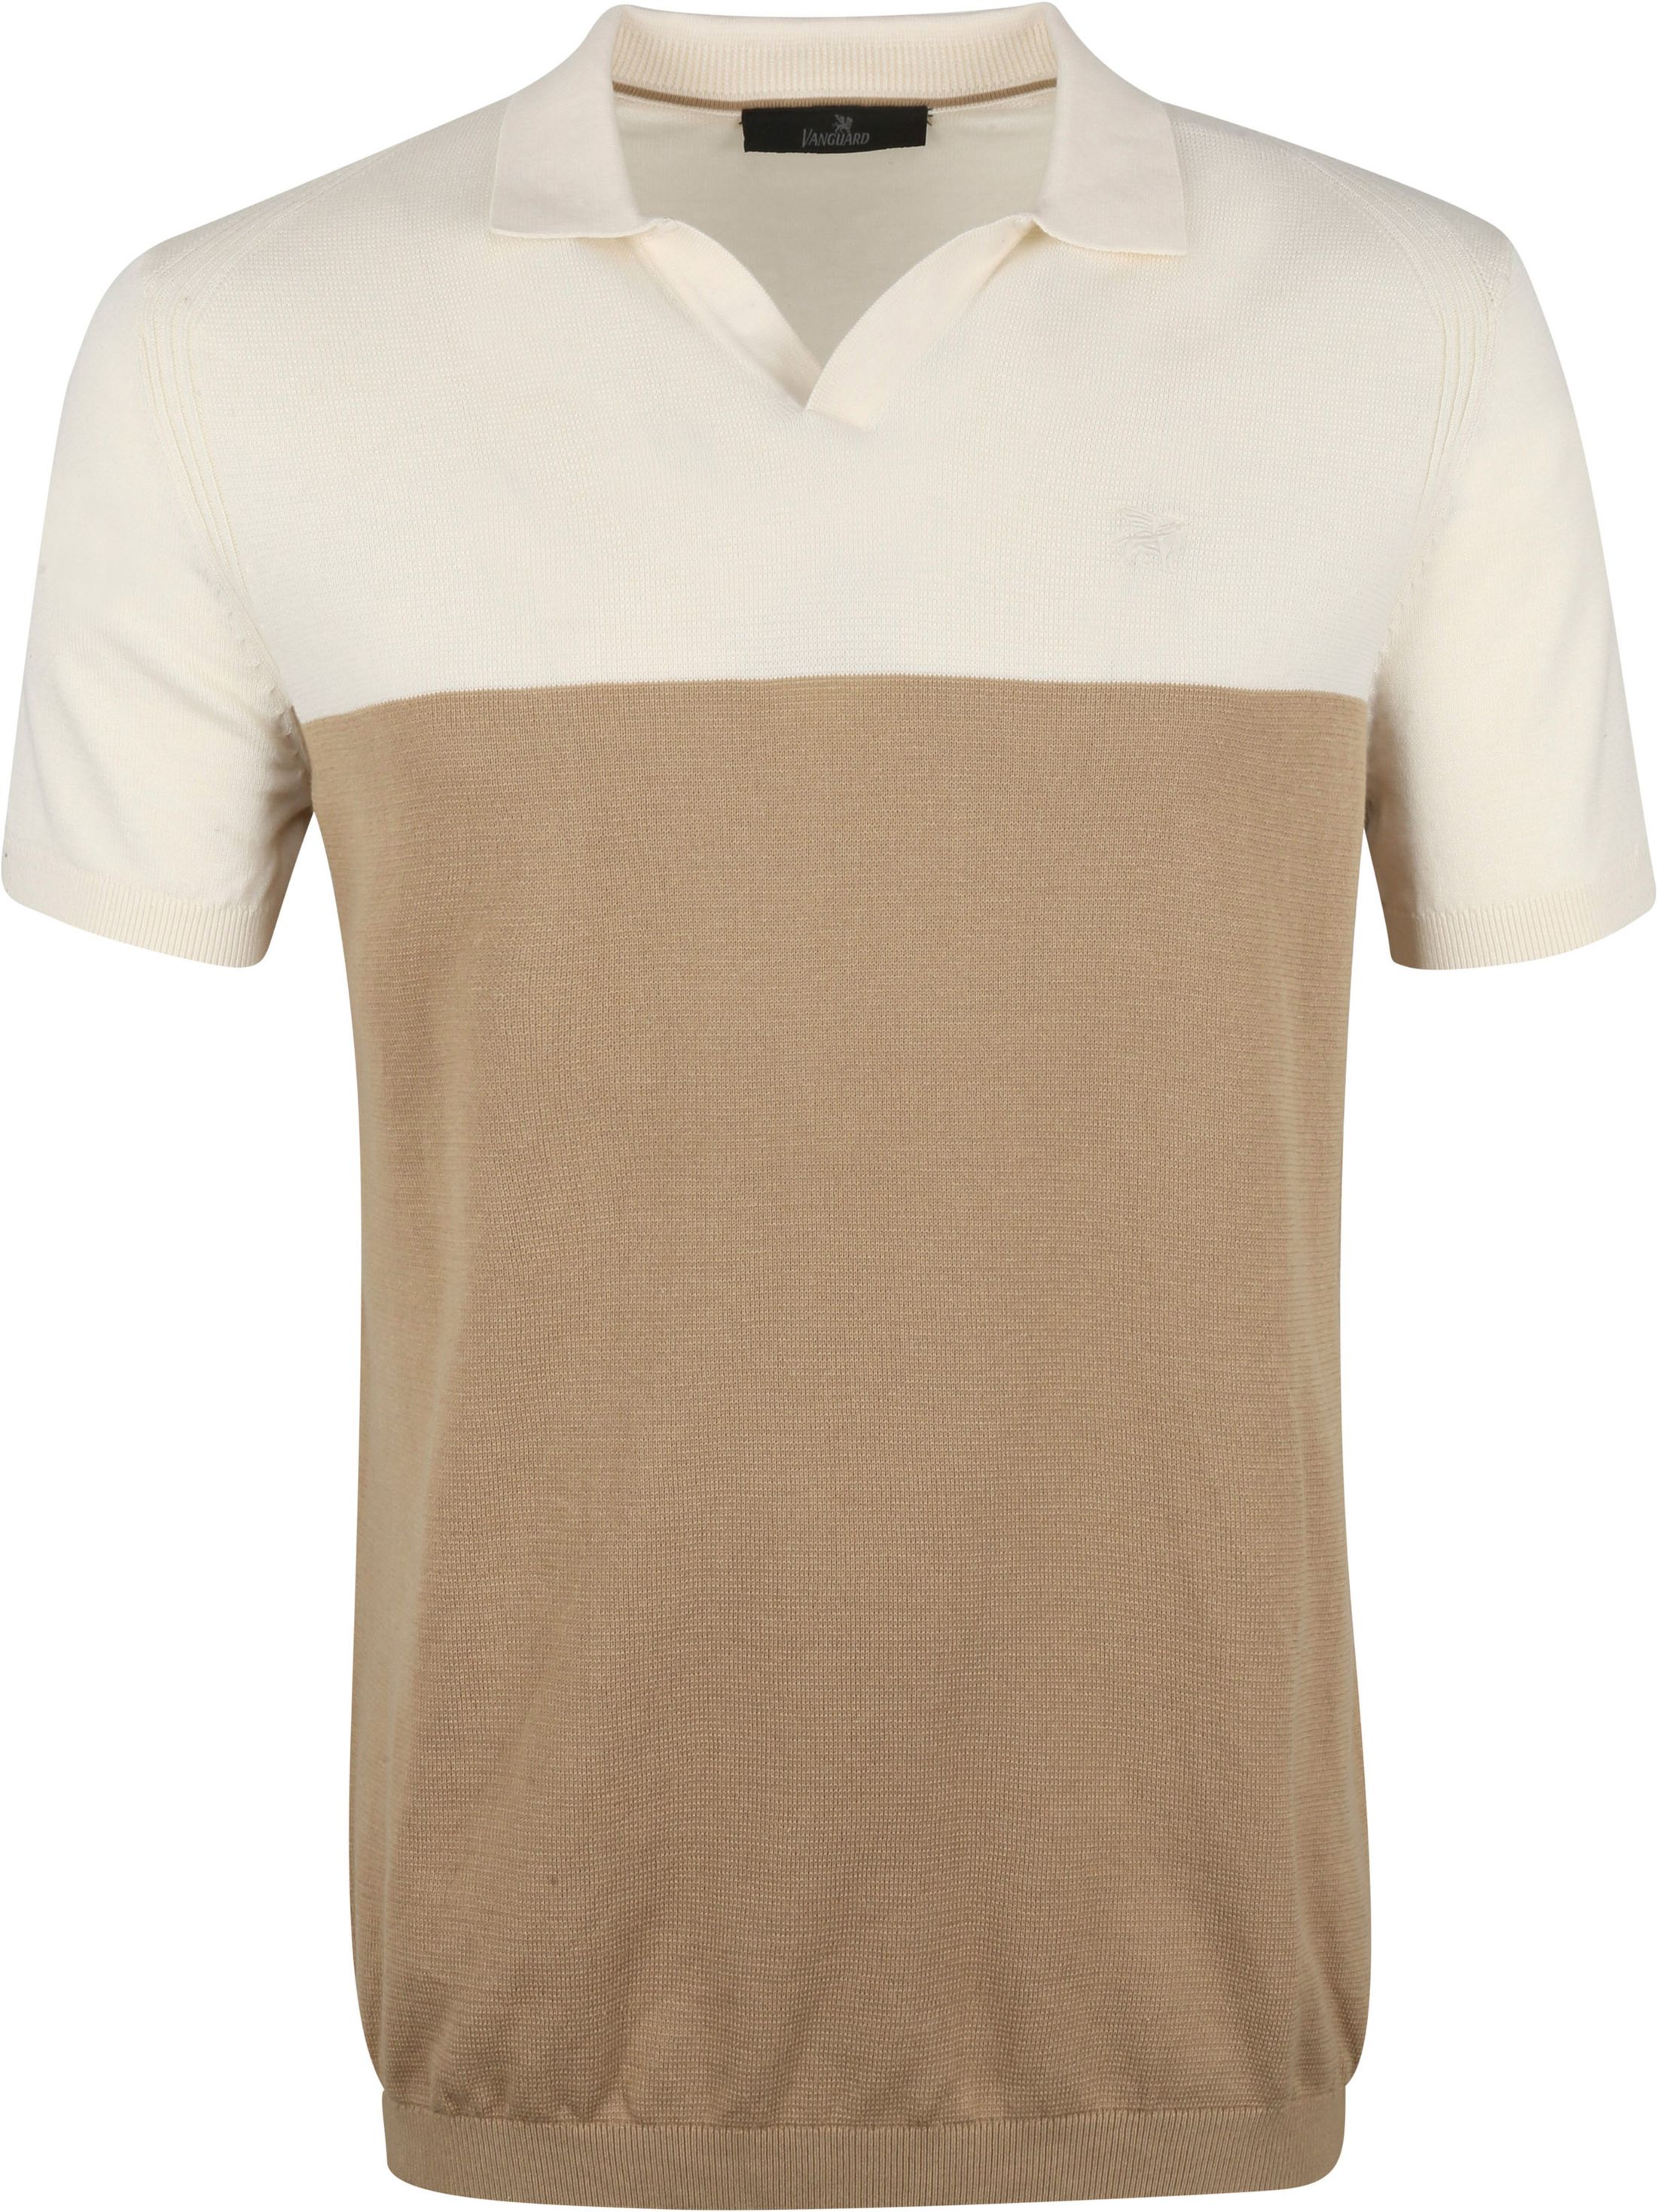 Vanguard Polo Shirt Knitted Beige Off-White Ecru size L